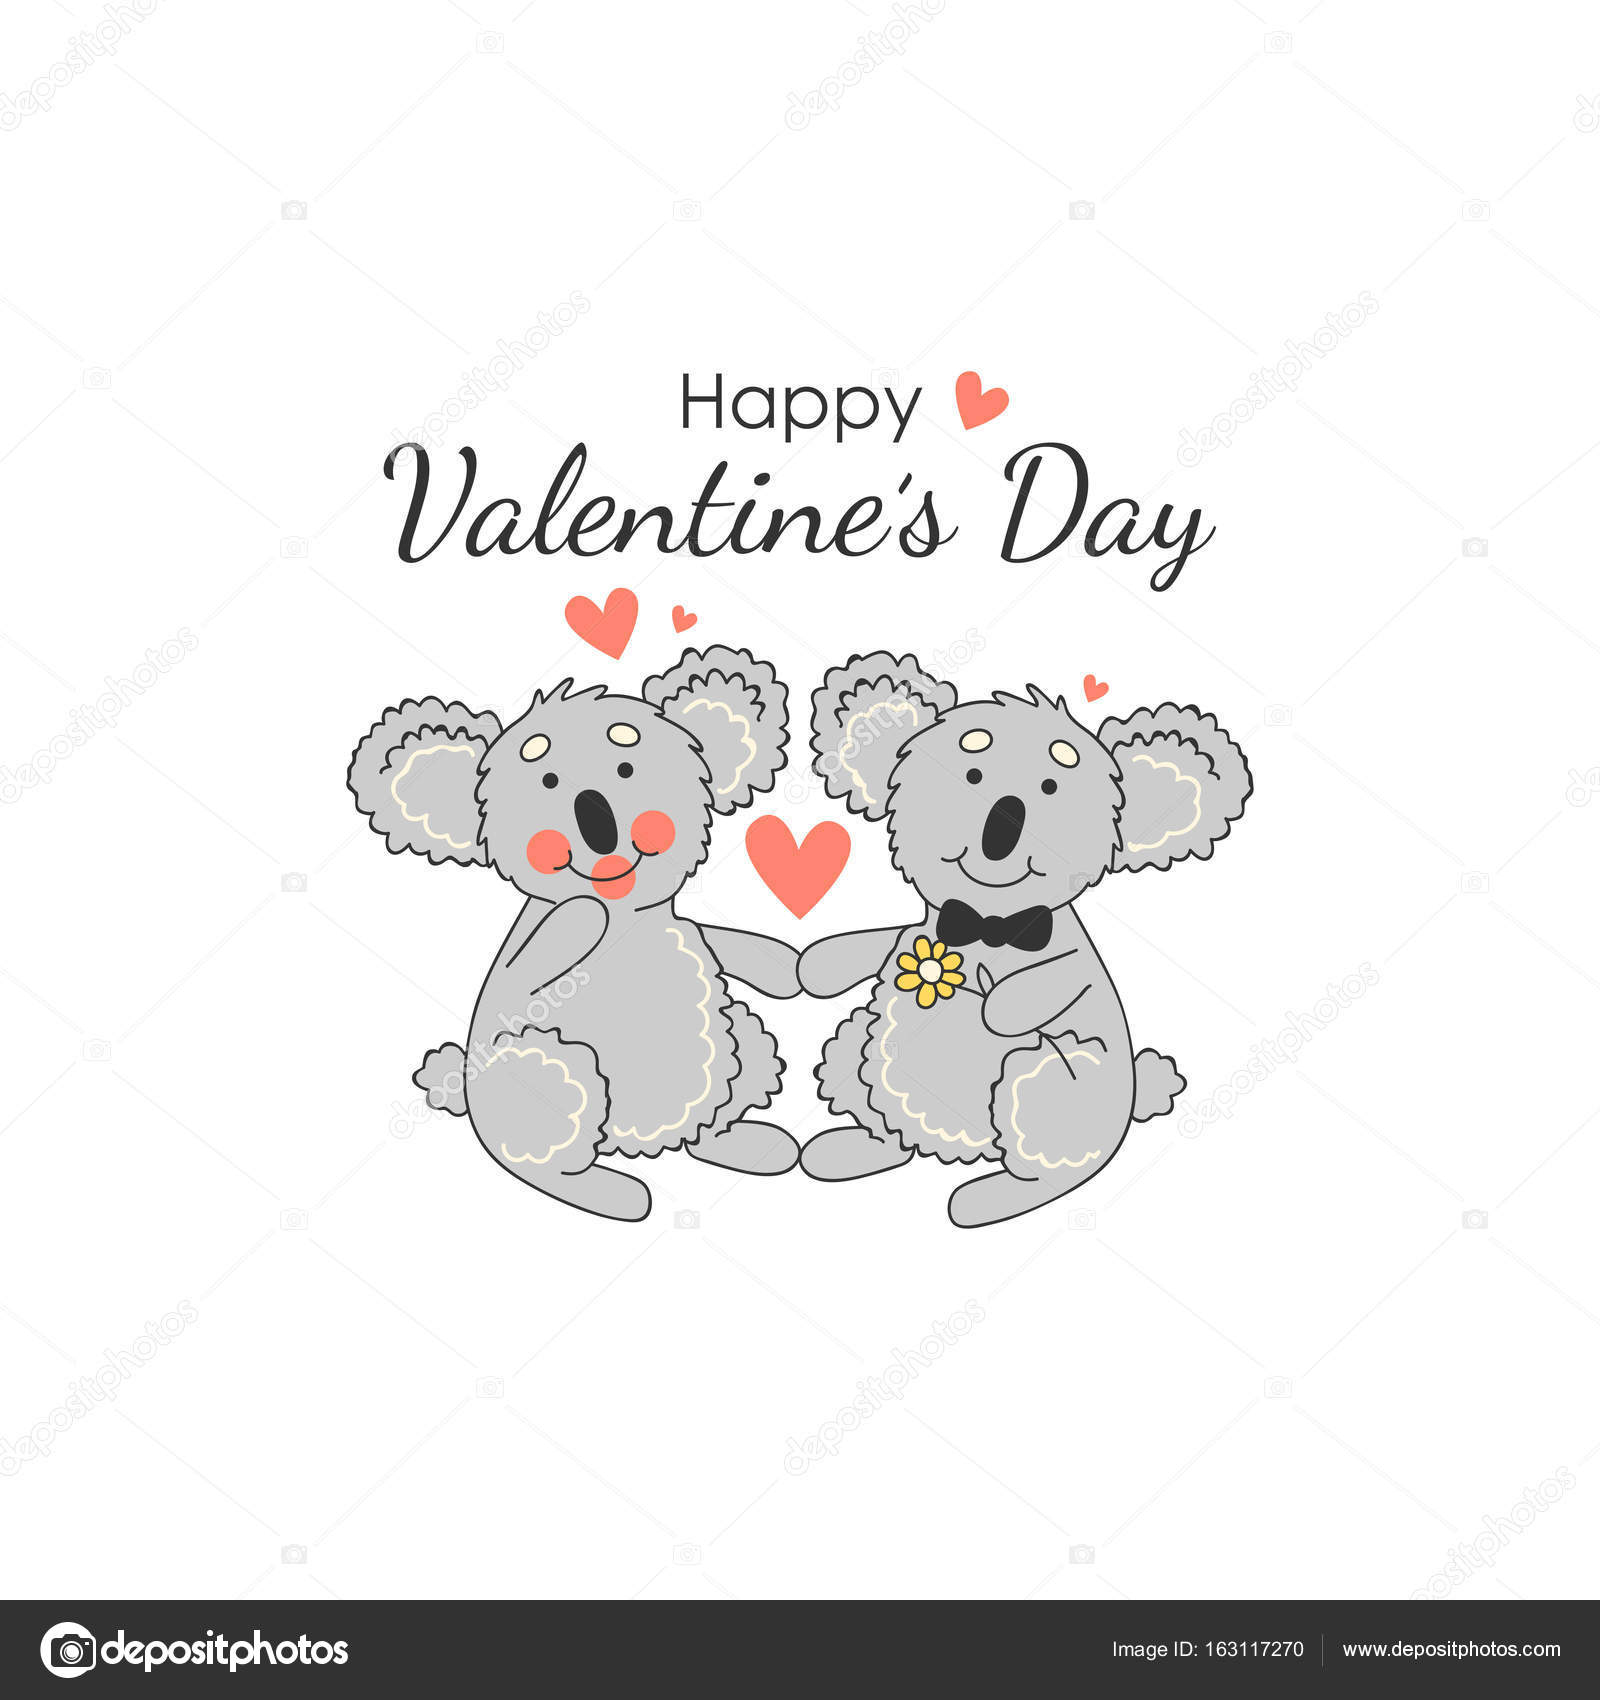 Download Pictures: happy valentines funny | Happy Valentine's Day ...